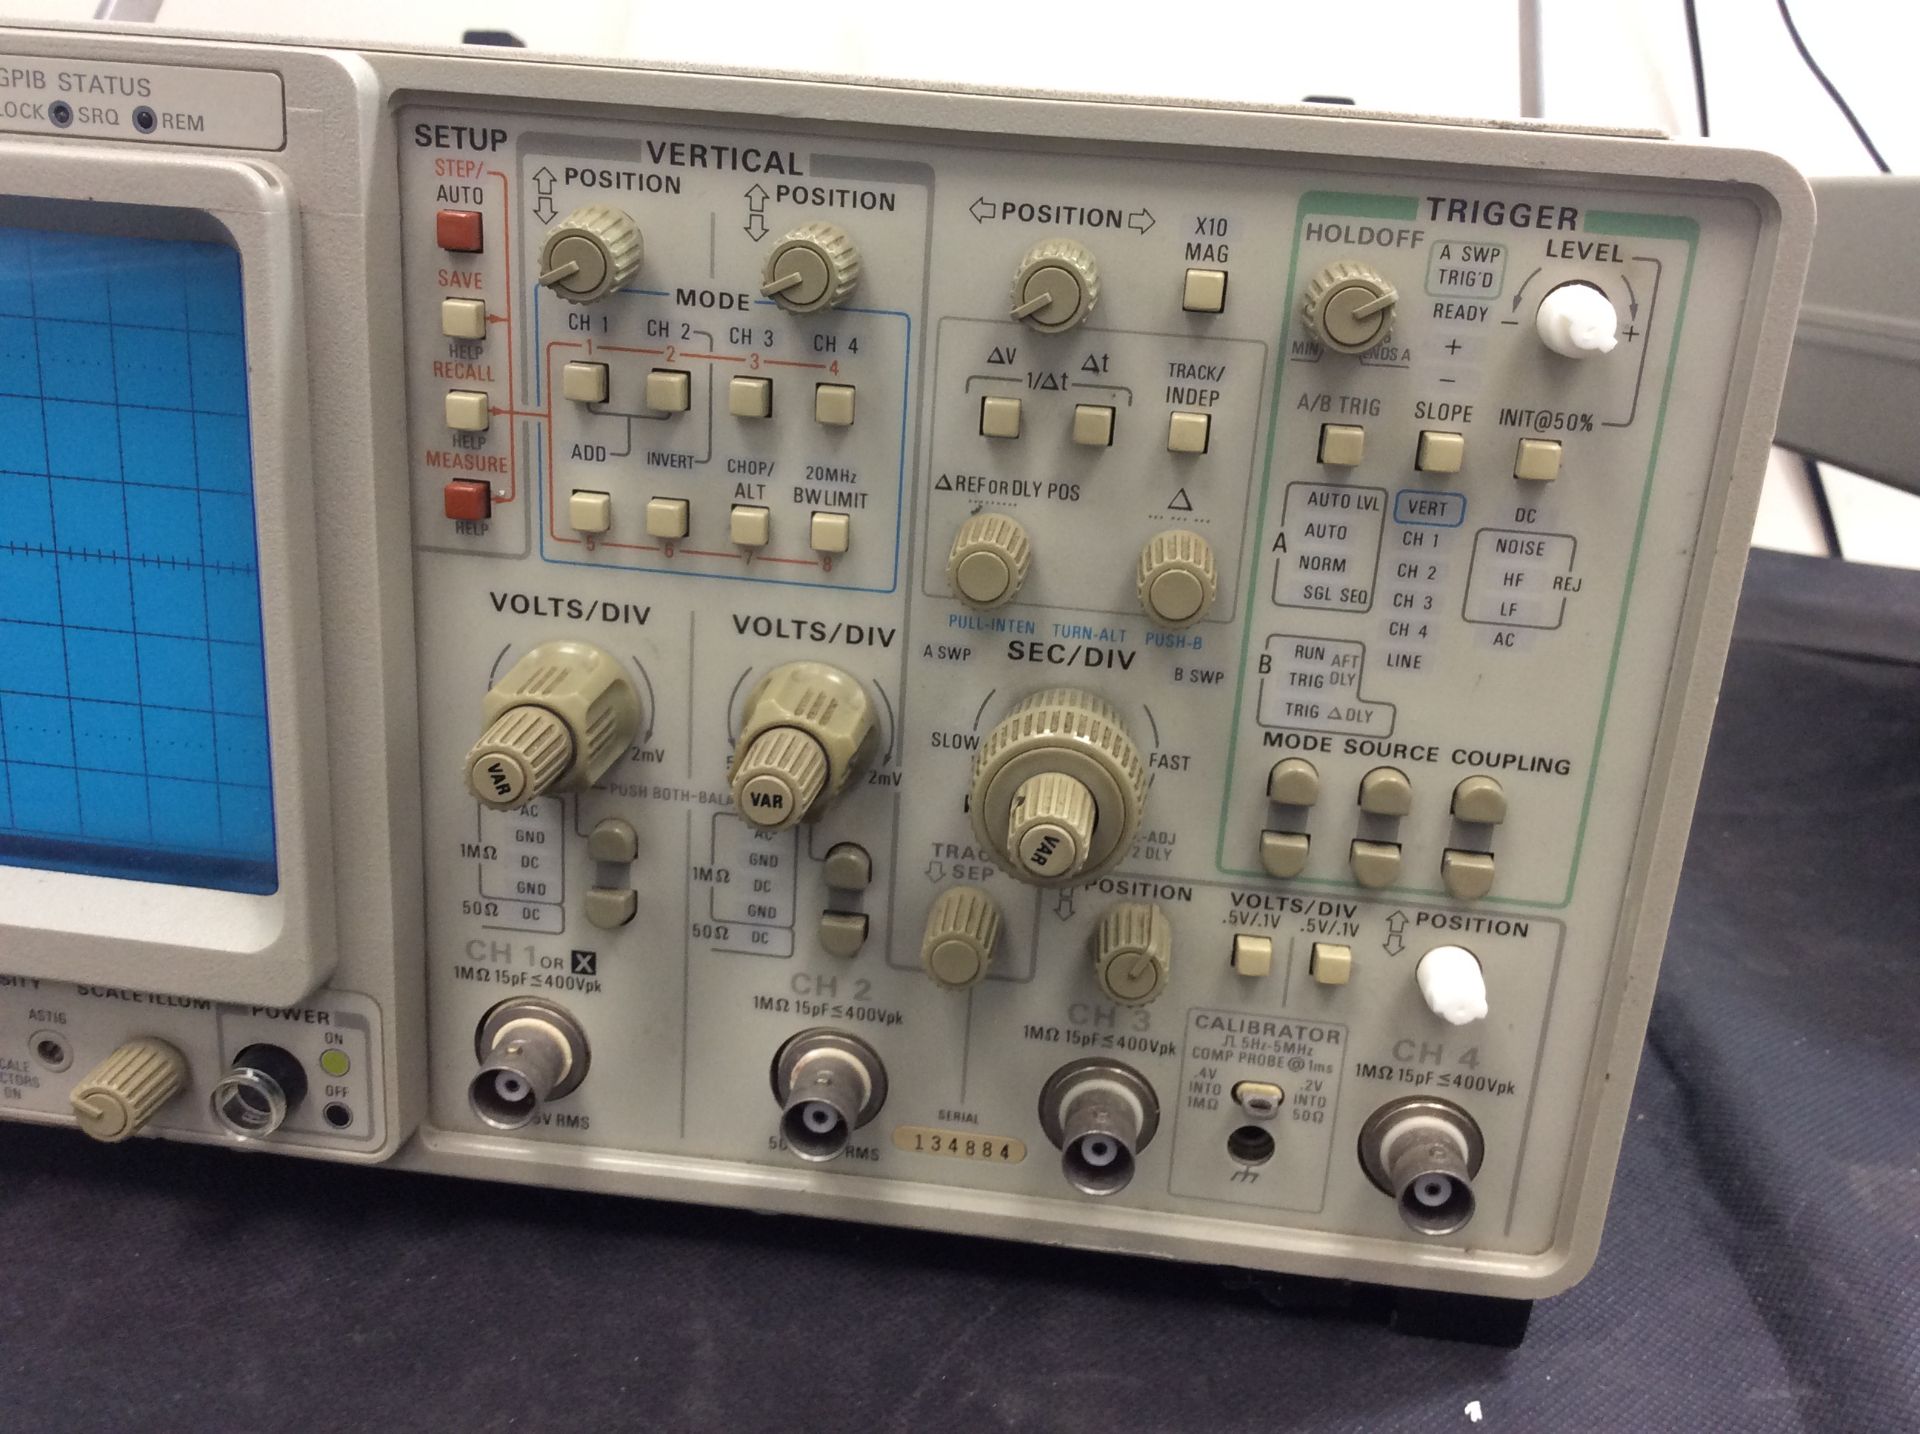 Tektronix 2465b 4 channel analog oscilloscope - Image 3 of 4